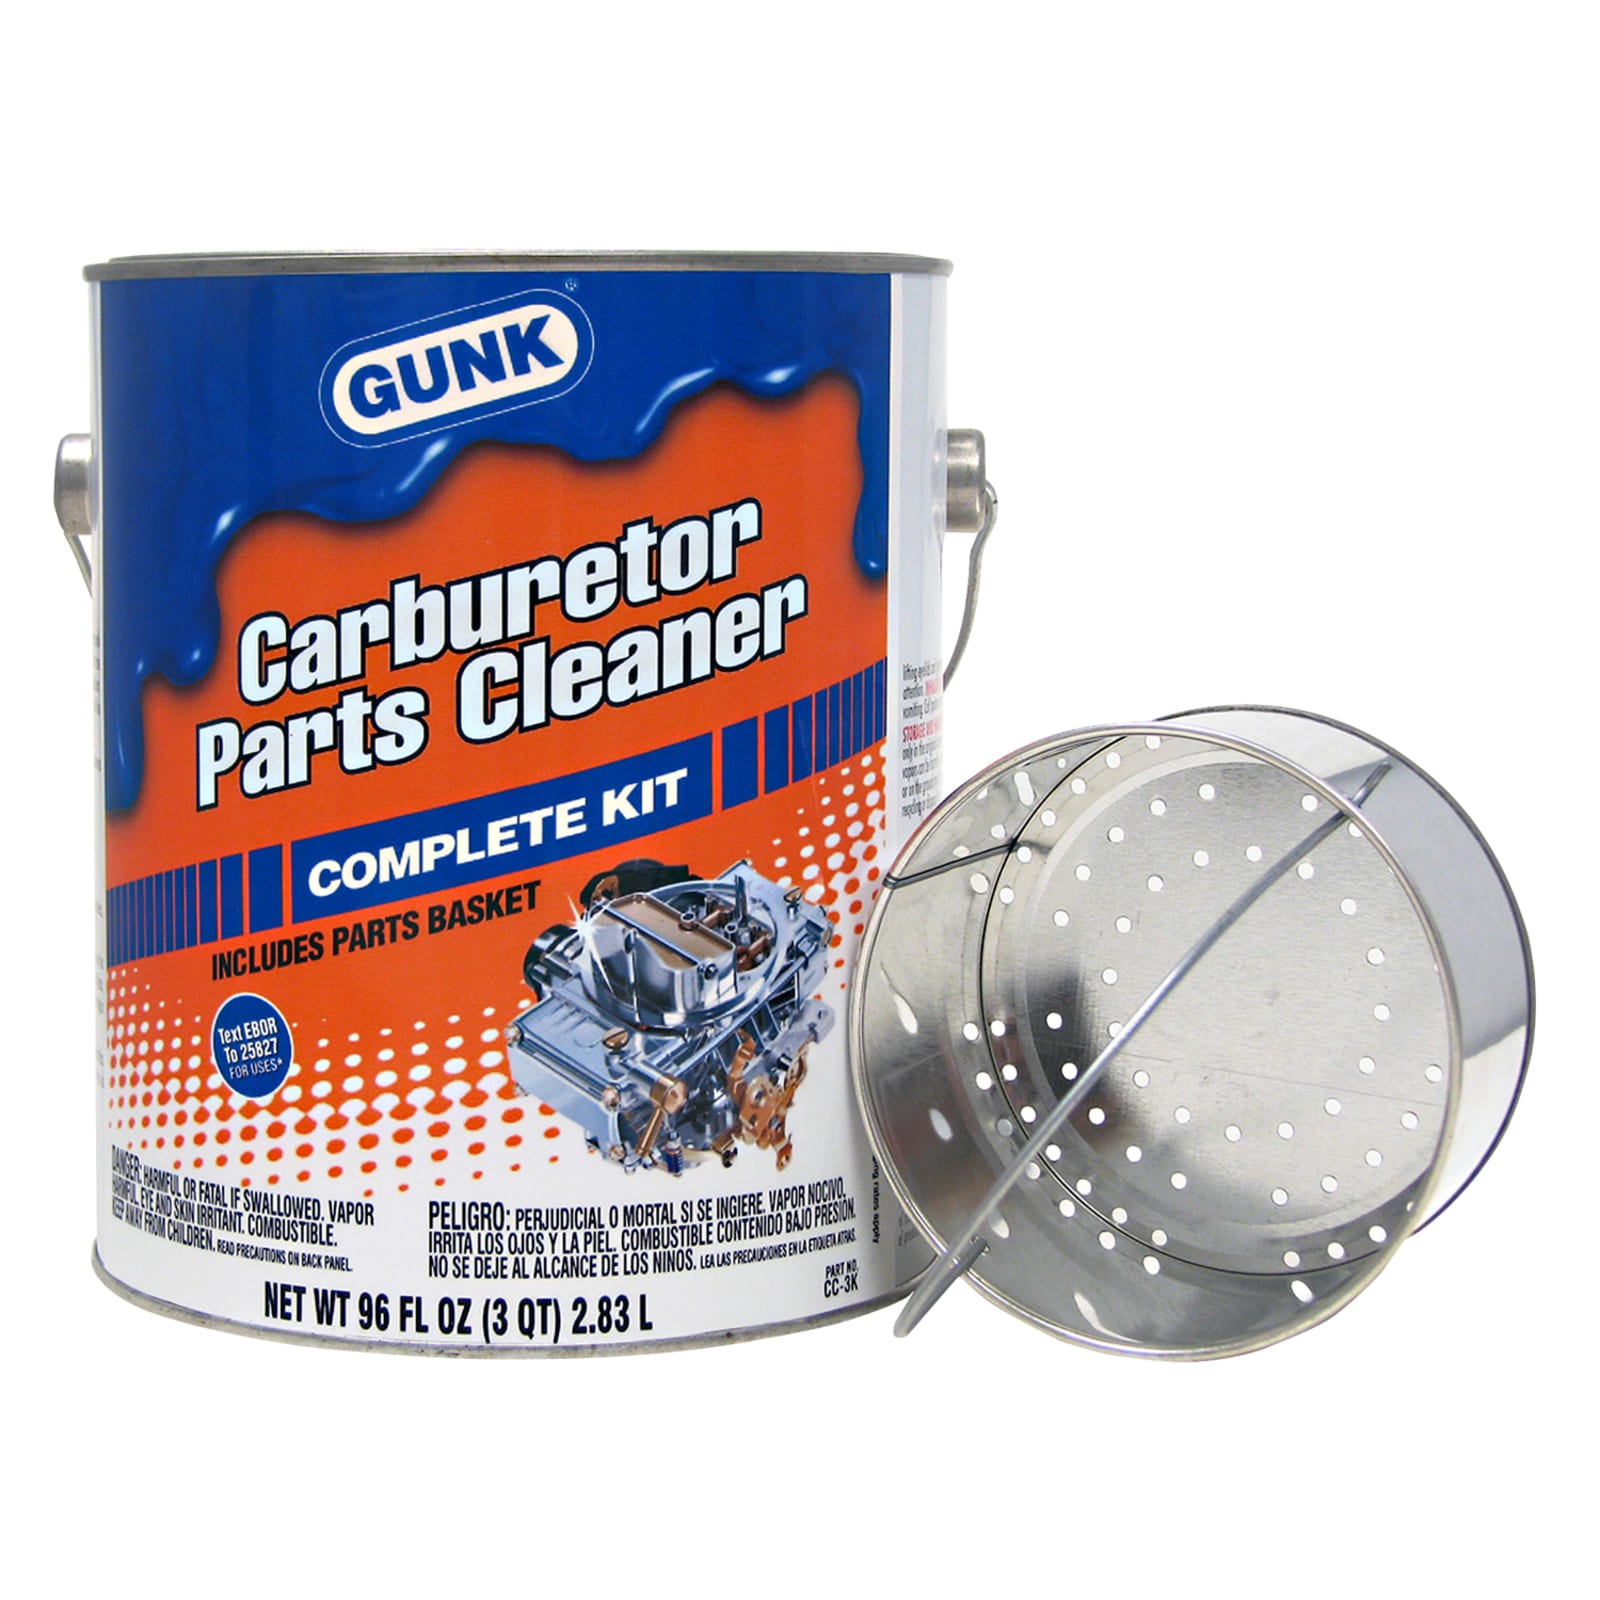 GUNK 96 oz Carburetor Parts Cleaner Kit by GUNK at Fleet Farm